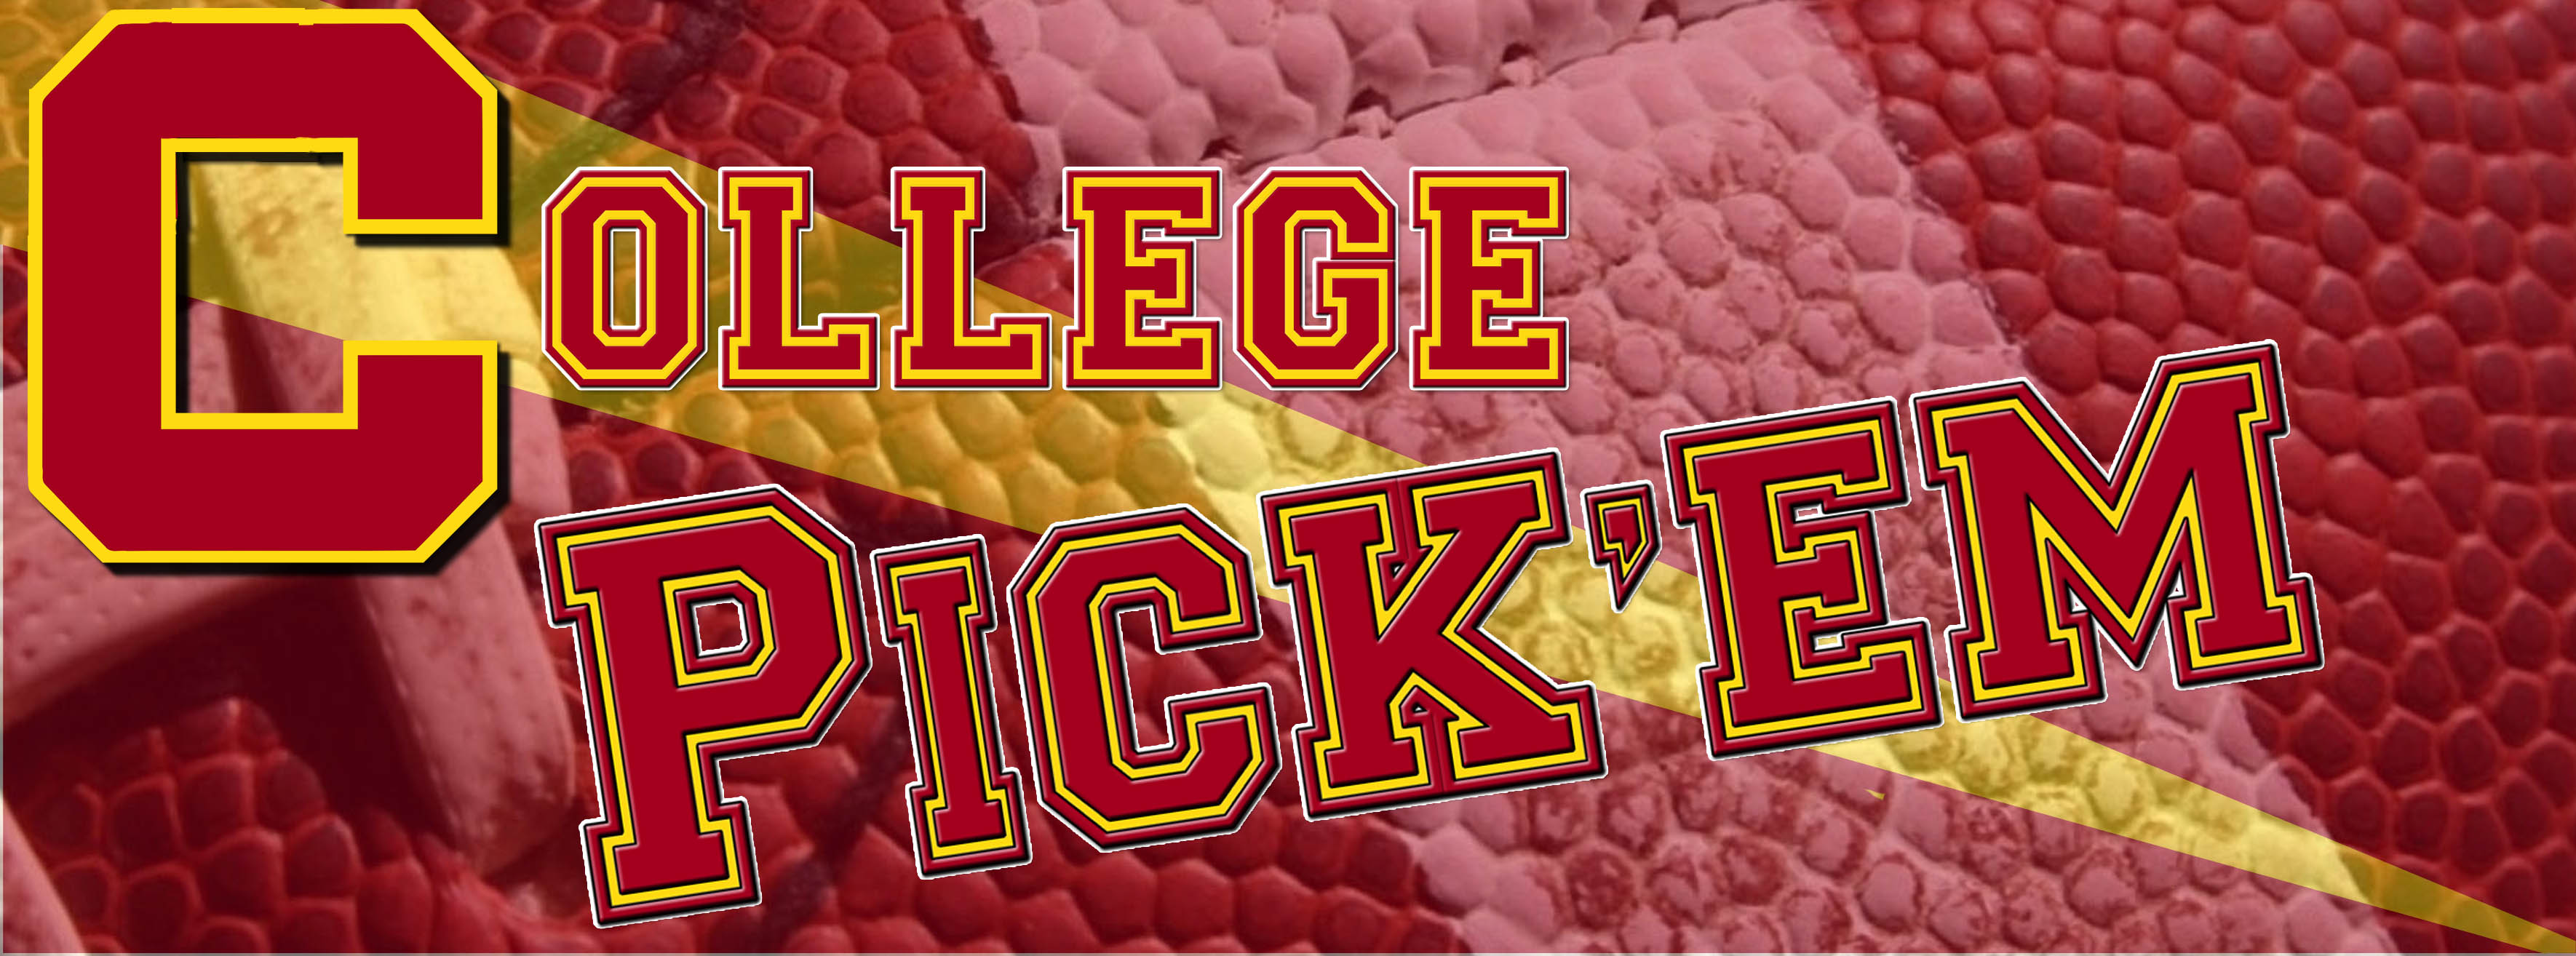 College Football Pick'em Week of 9/14 Daily Trojan